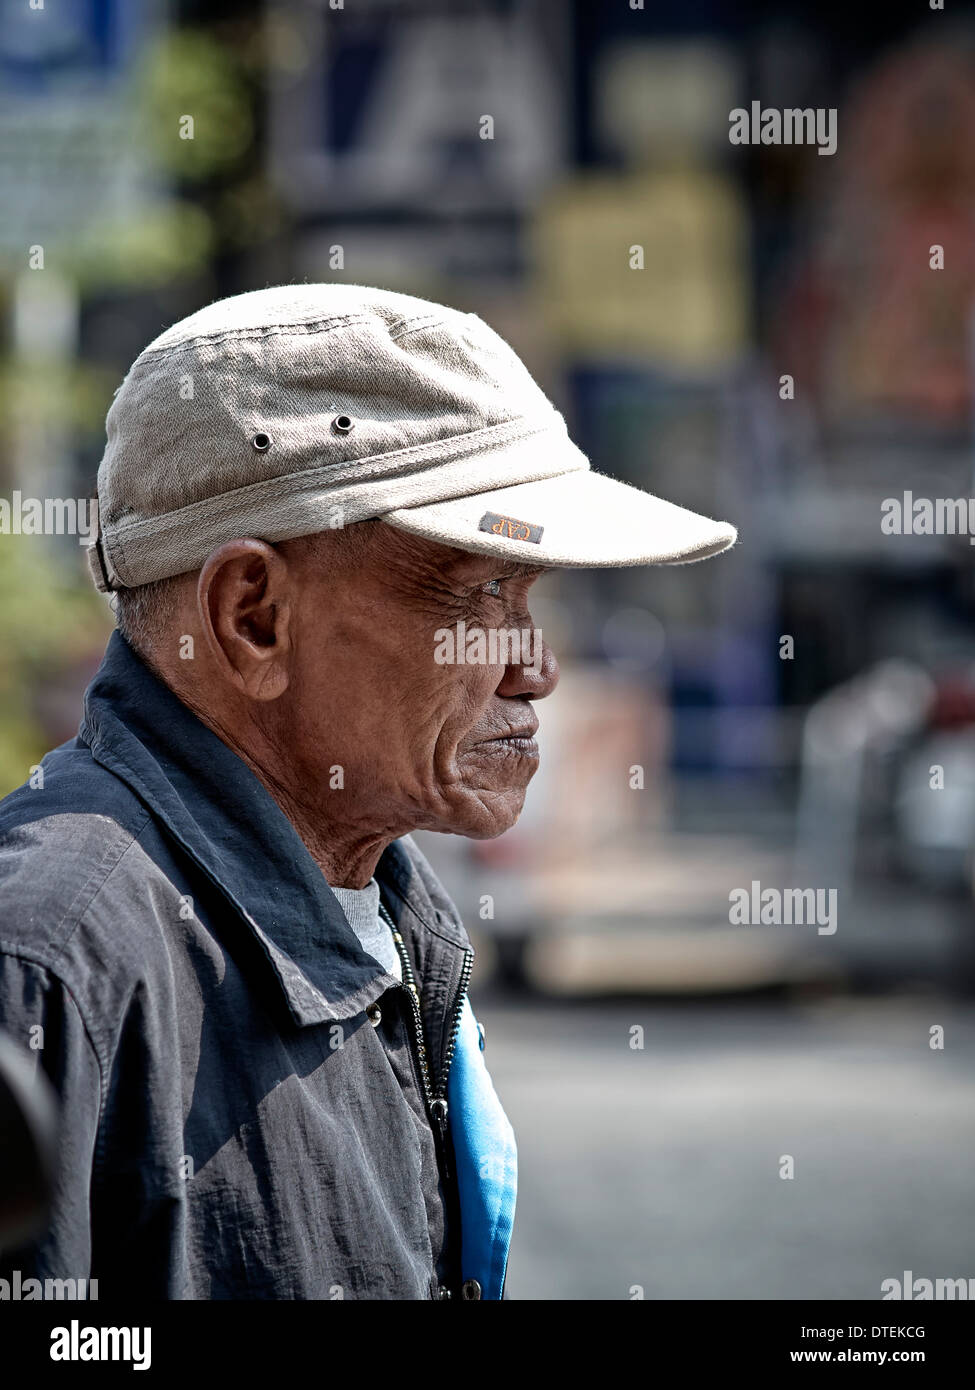 Baseballcap Senior. Älterer asiatischer Staatsbürger, der eine moderne Baseballmütze trägt. Thailand S. E. Asien Stockfoto